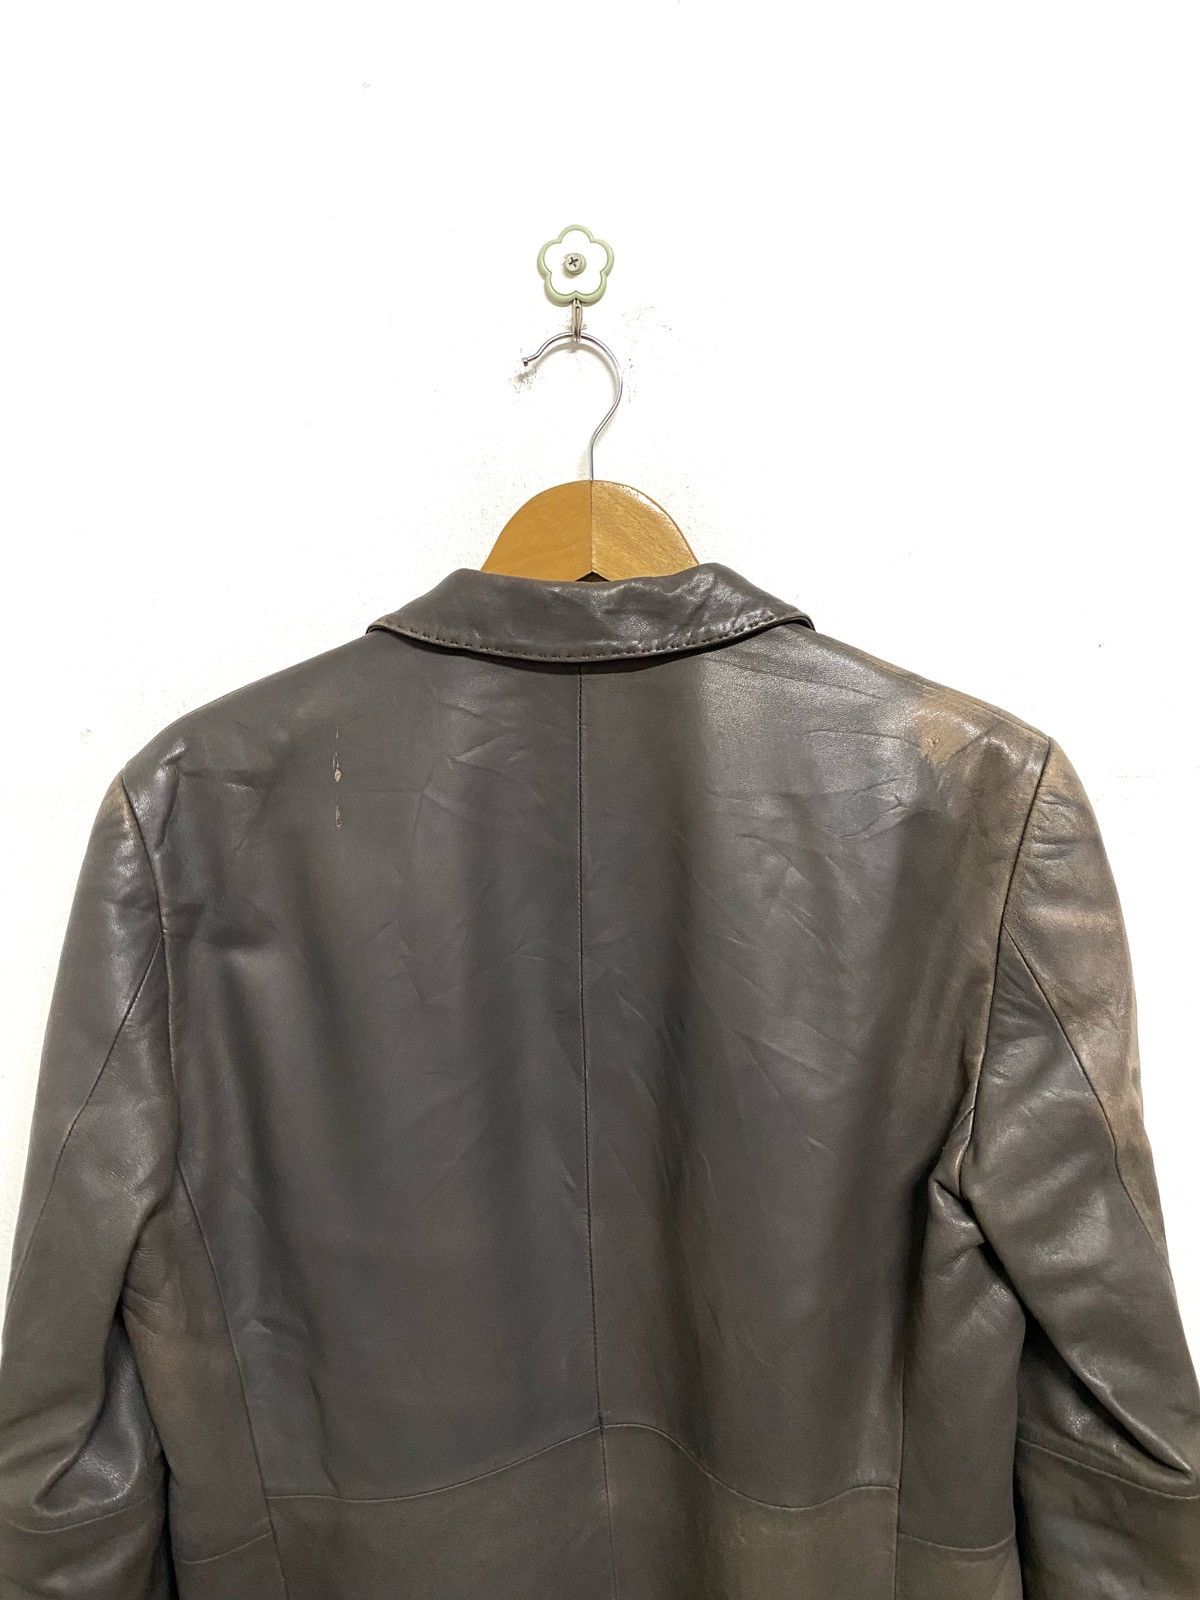 Cerruti 1881 Lambskin Leather Jacket - 6